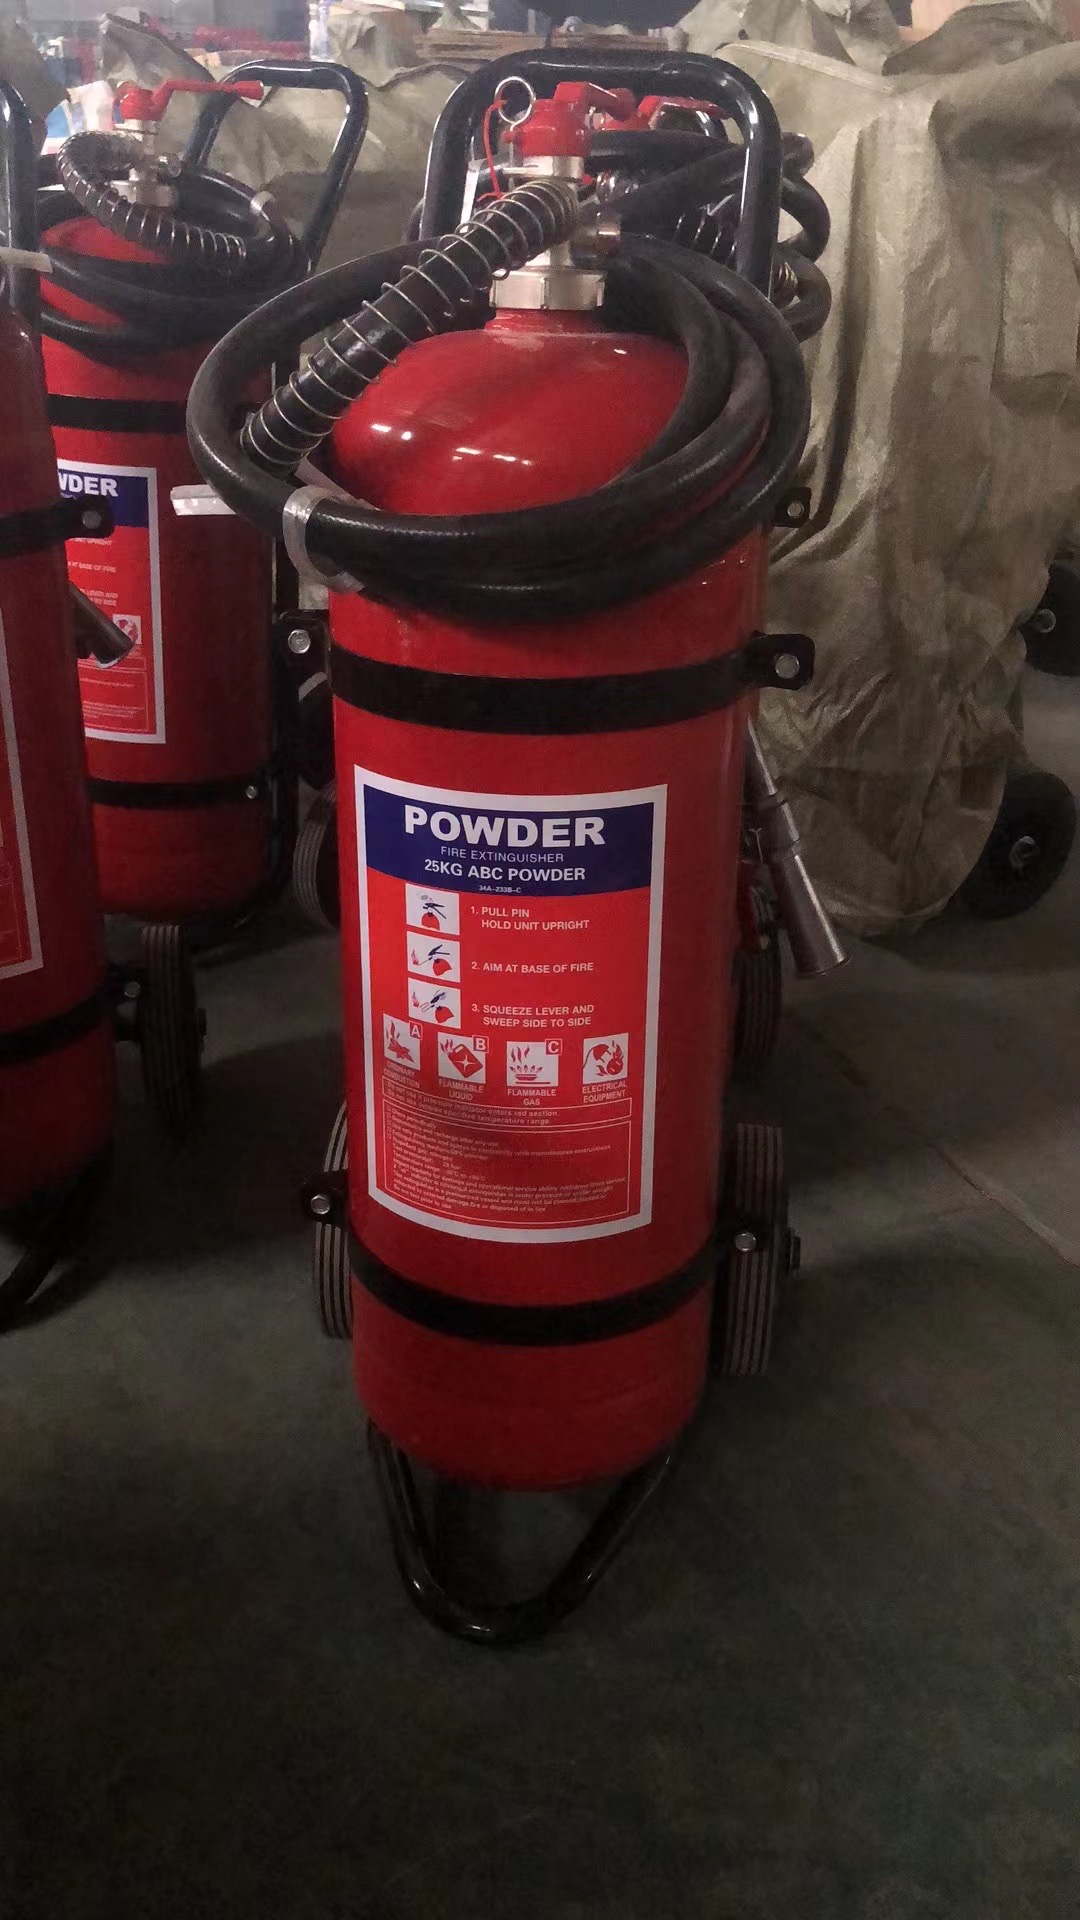 25Kg Wheeled dry powder fire extinguisher